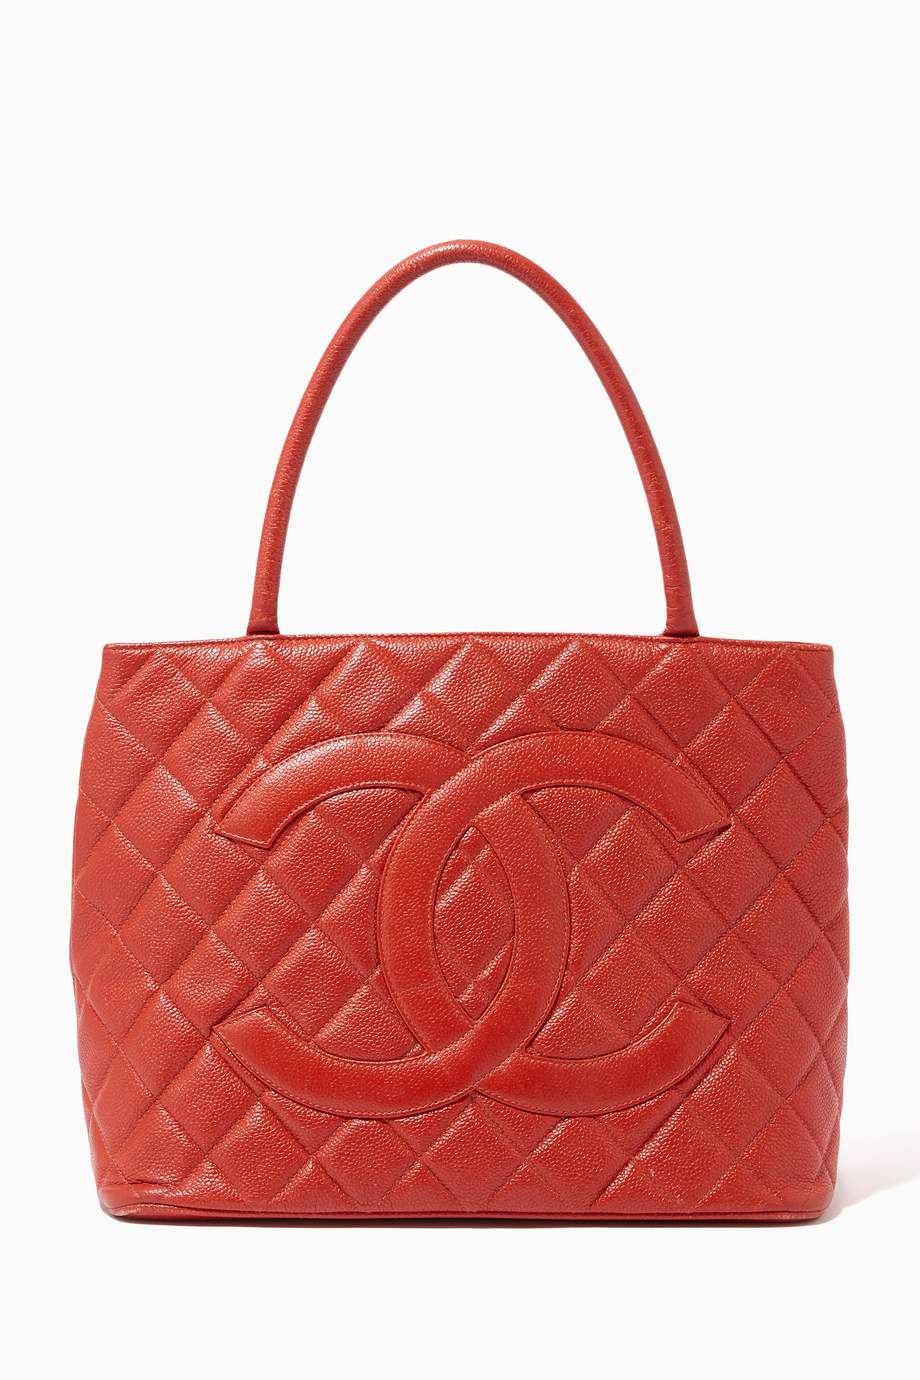 Shop Chanel Vintage Red Matelasse Medallion Tote Bag in Caviar Skin for Women | Ounass UAE